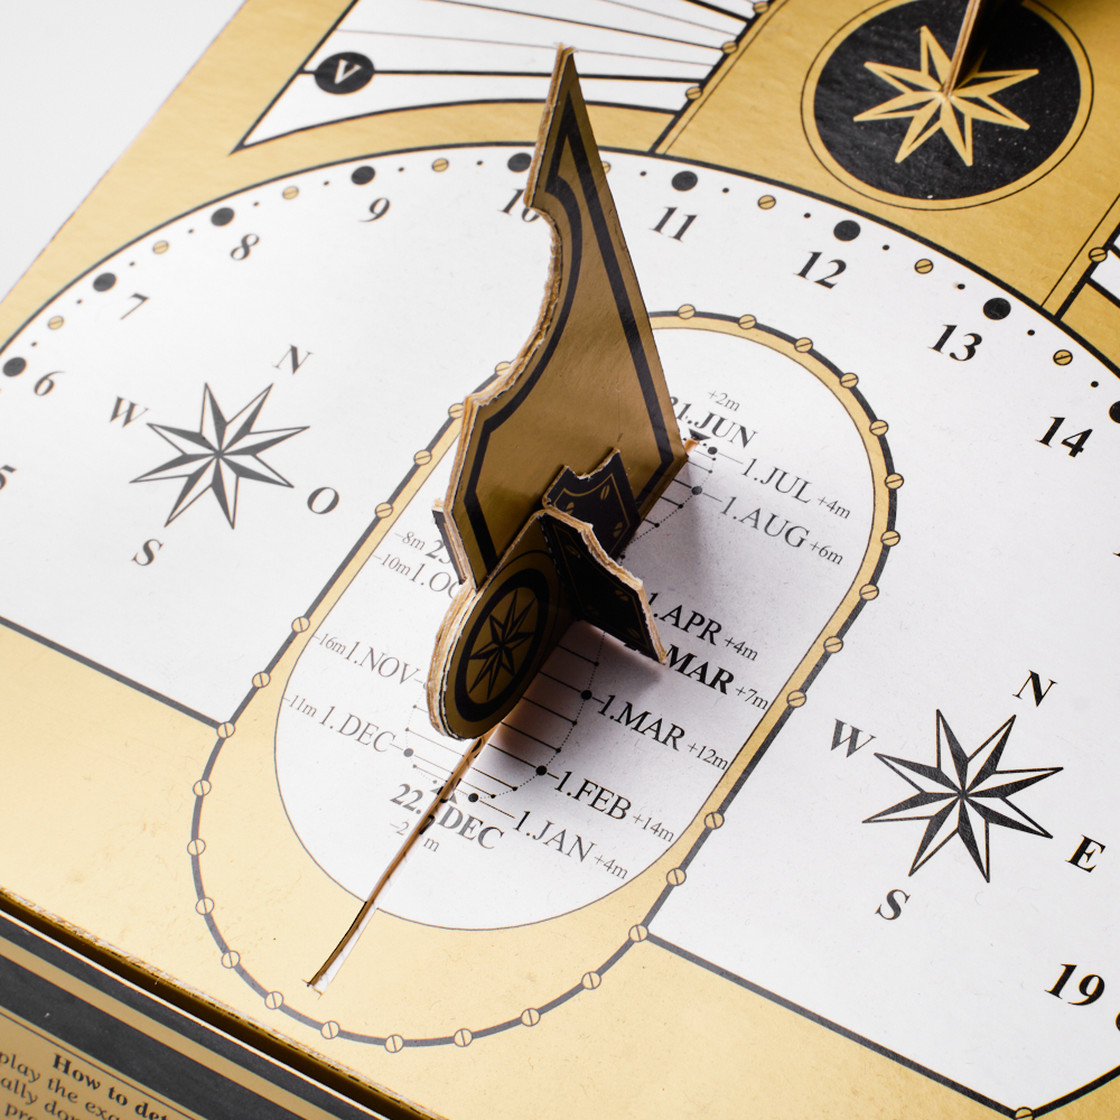 The compass sundial - AstroMedia